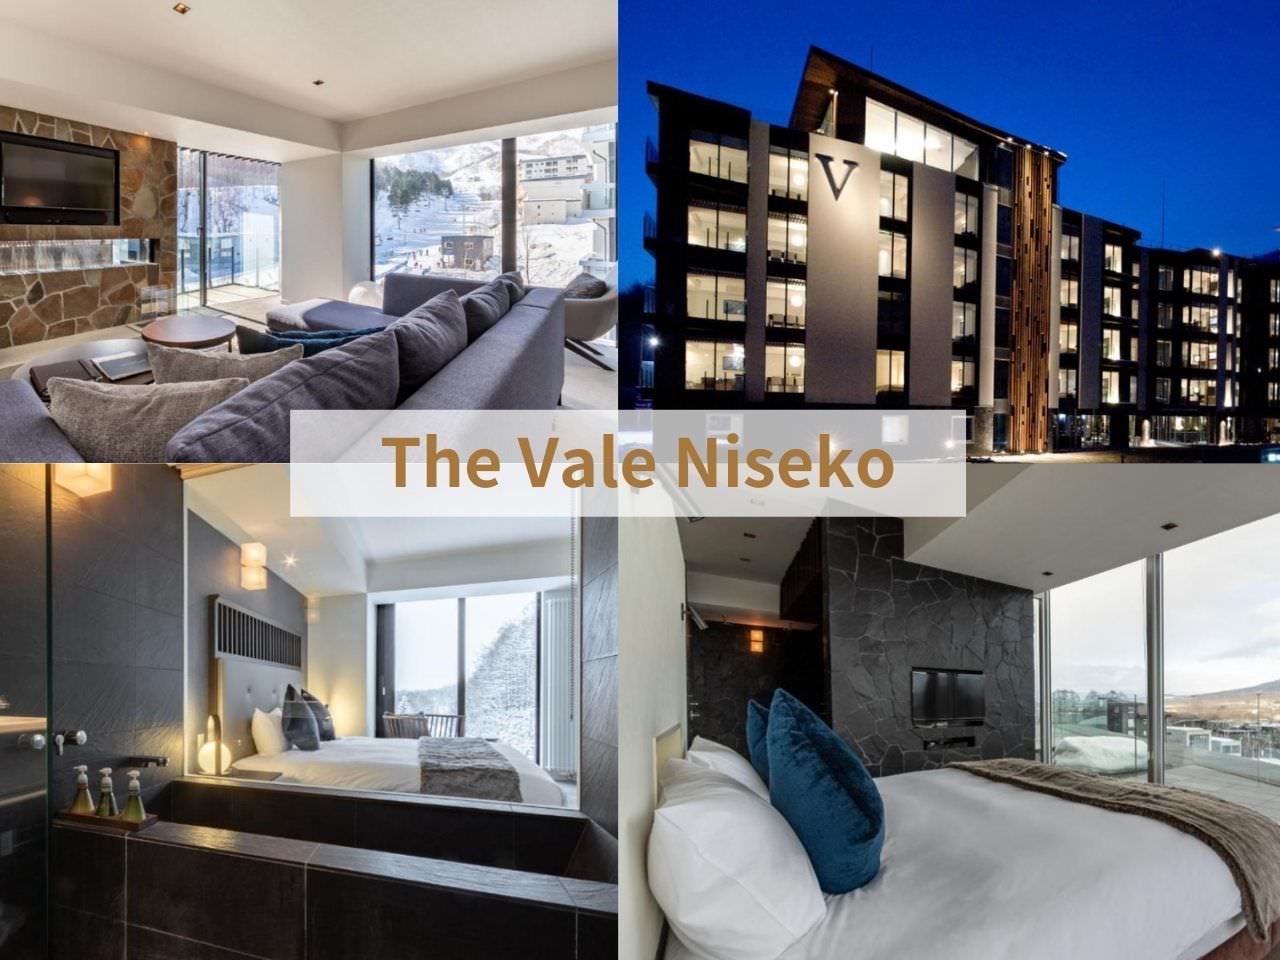 The Vale Niseko